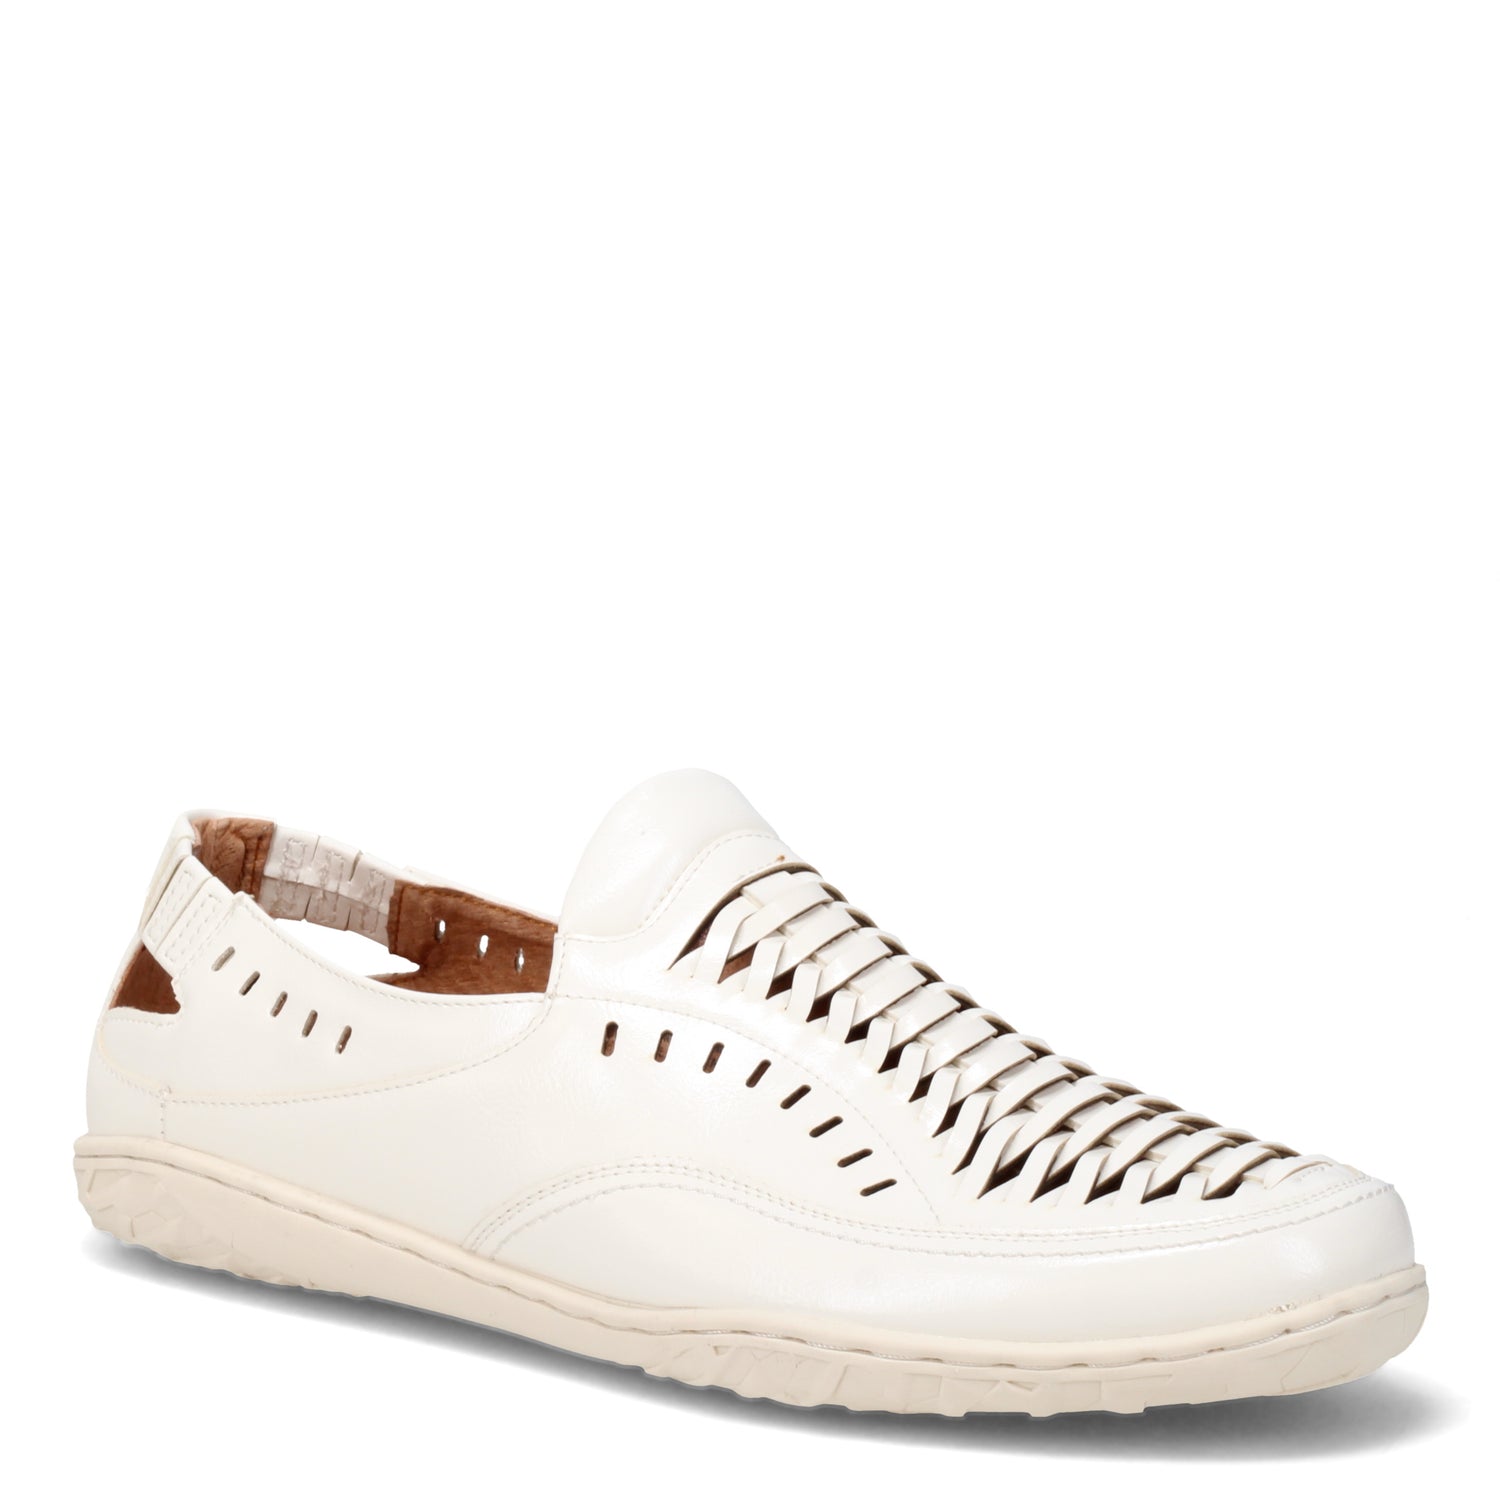 Peltz Shoes  Men's Stacy Adams Ibiza Slip-On WHITE 25440-100